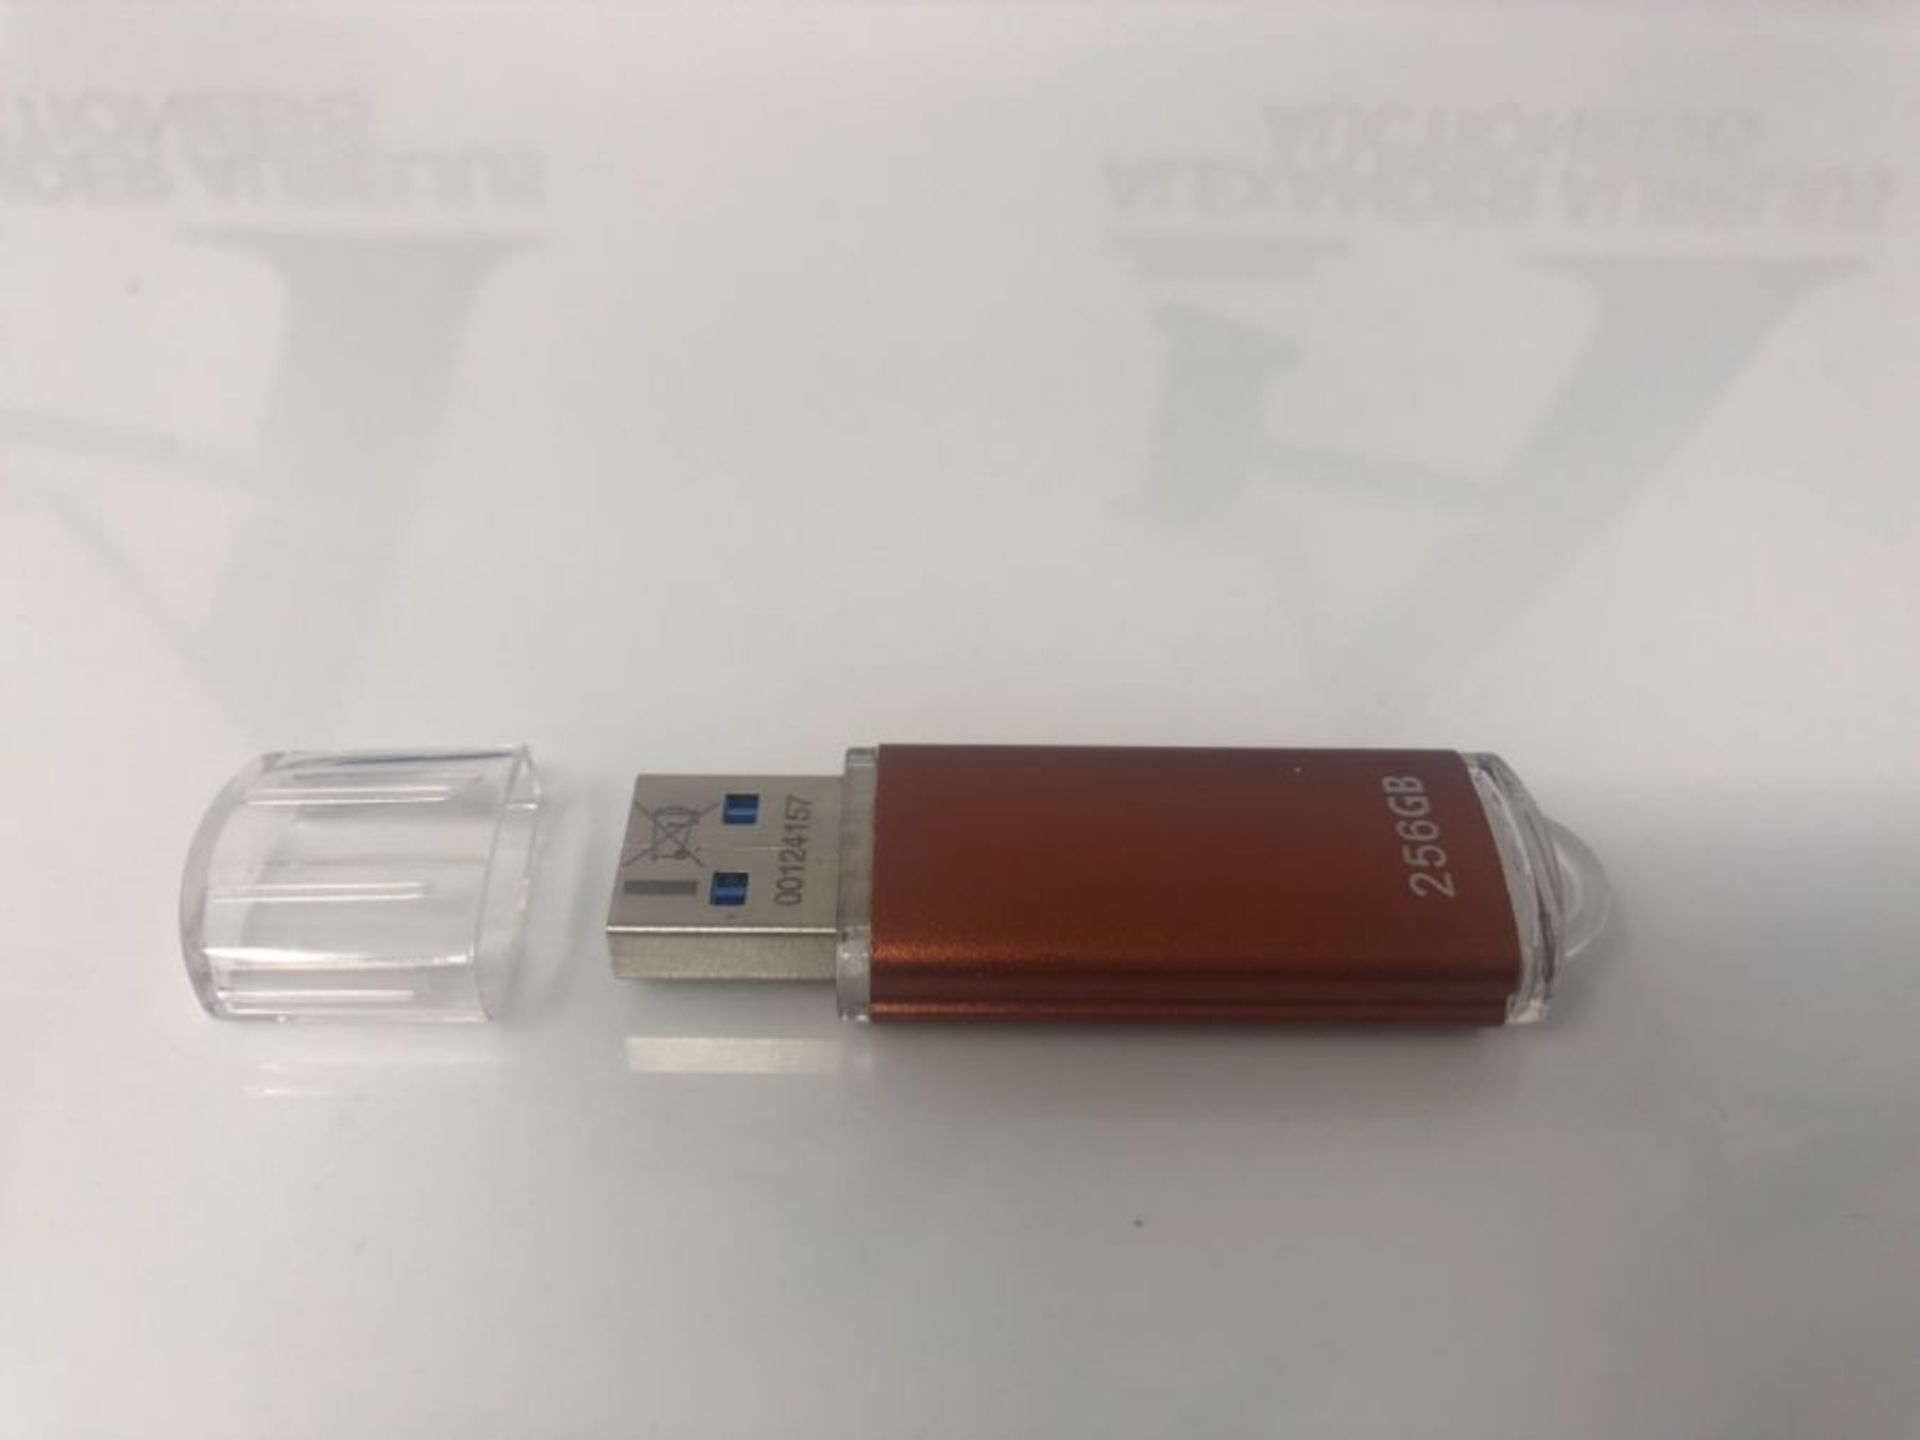 Hama Laeta FlashPen USB Stick USB 3.0, 16GB, 40MB/s - Brown brown brown 256 GB - Image 2 of 3